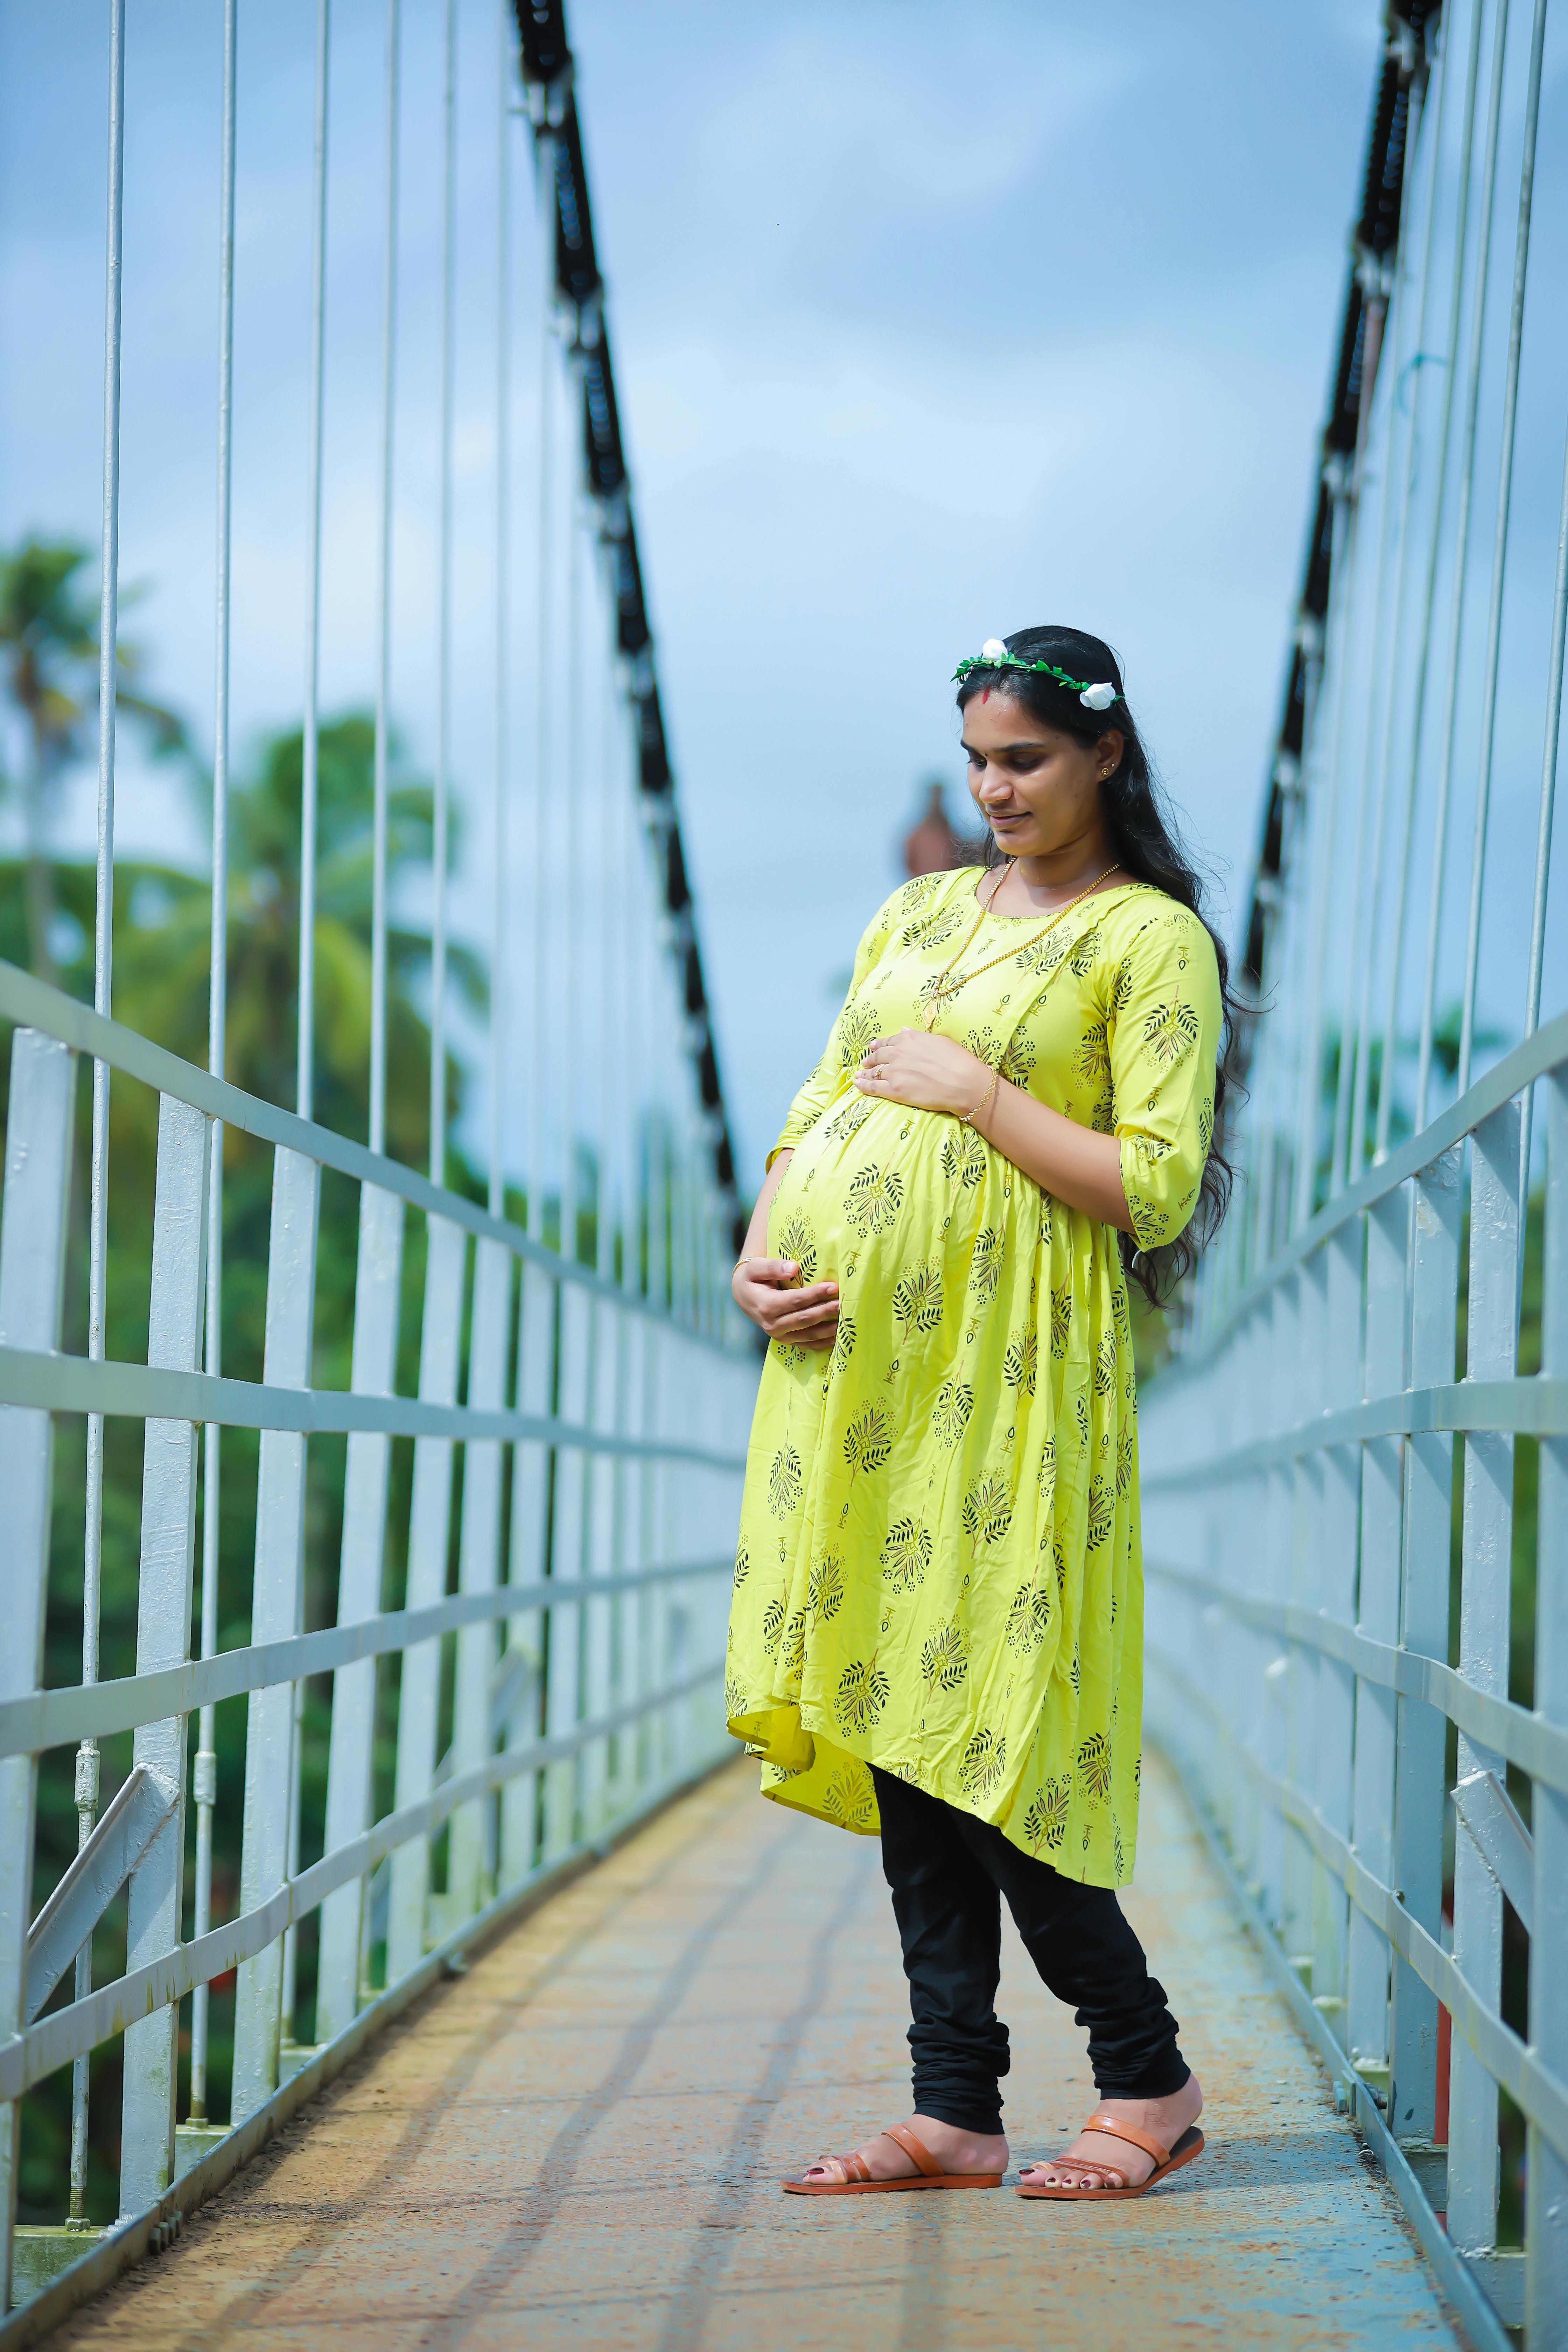 Pregnant woman is wearing blue sari, Stock image